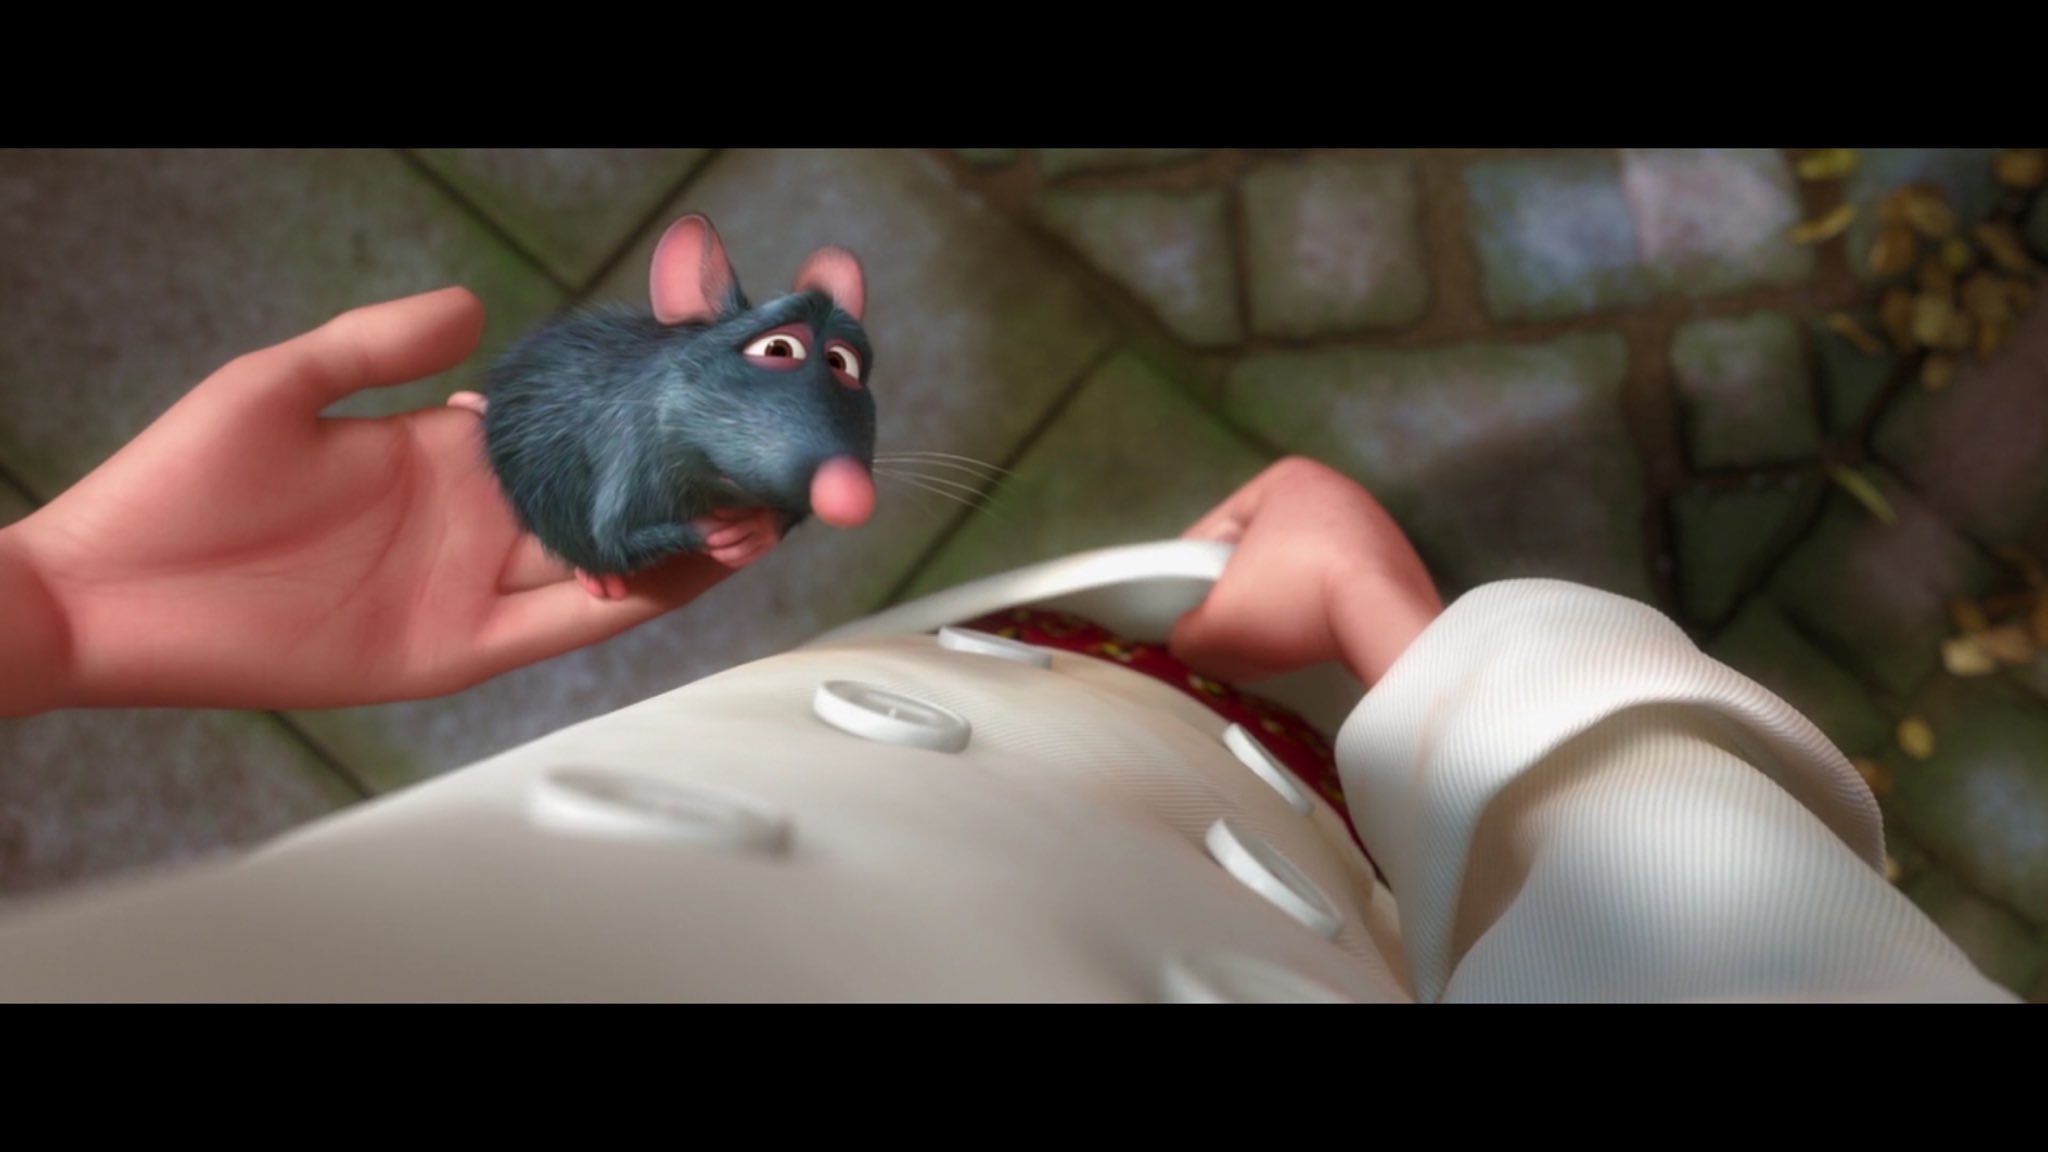 Cursed Animated Clips on Twitter: "Ratatouille (2007) - Pixar/Disney. 